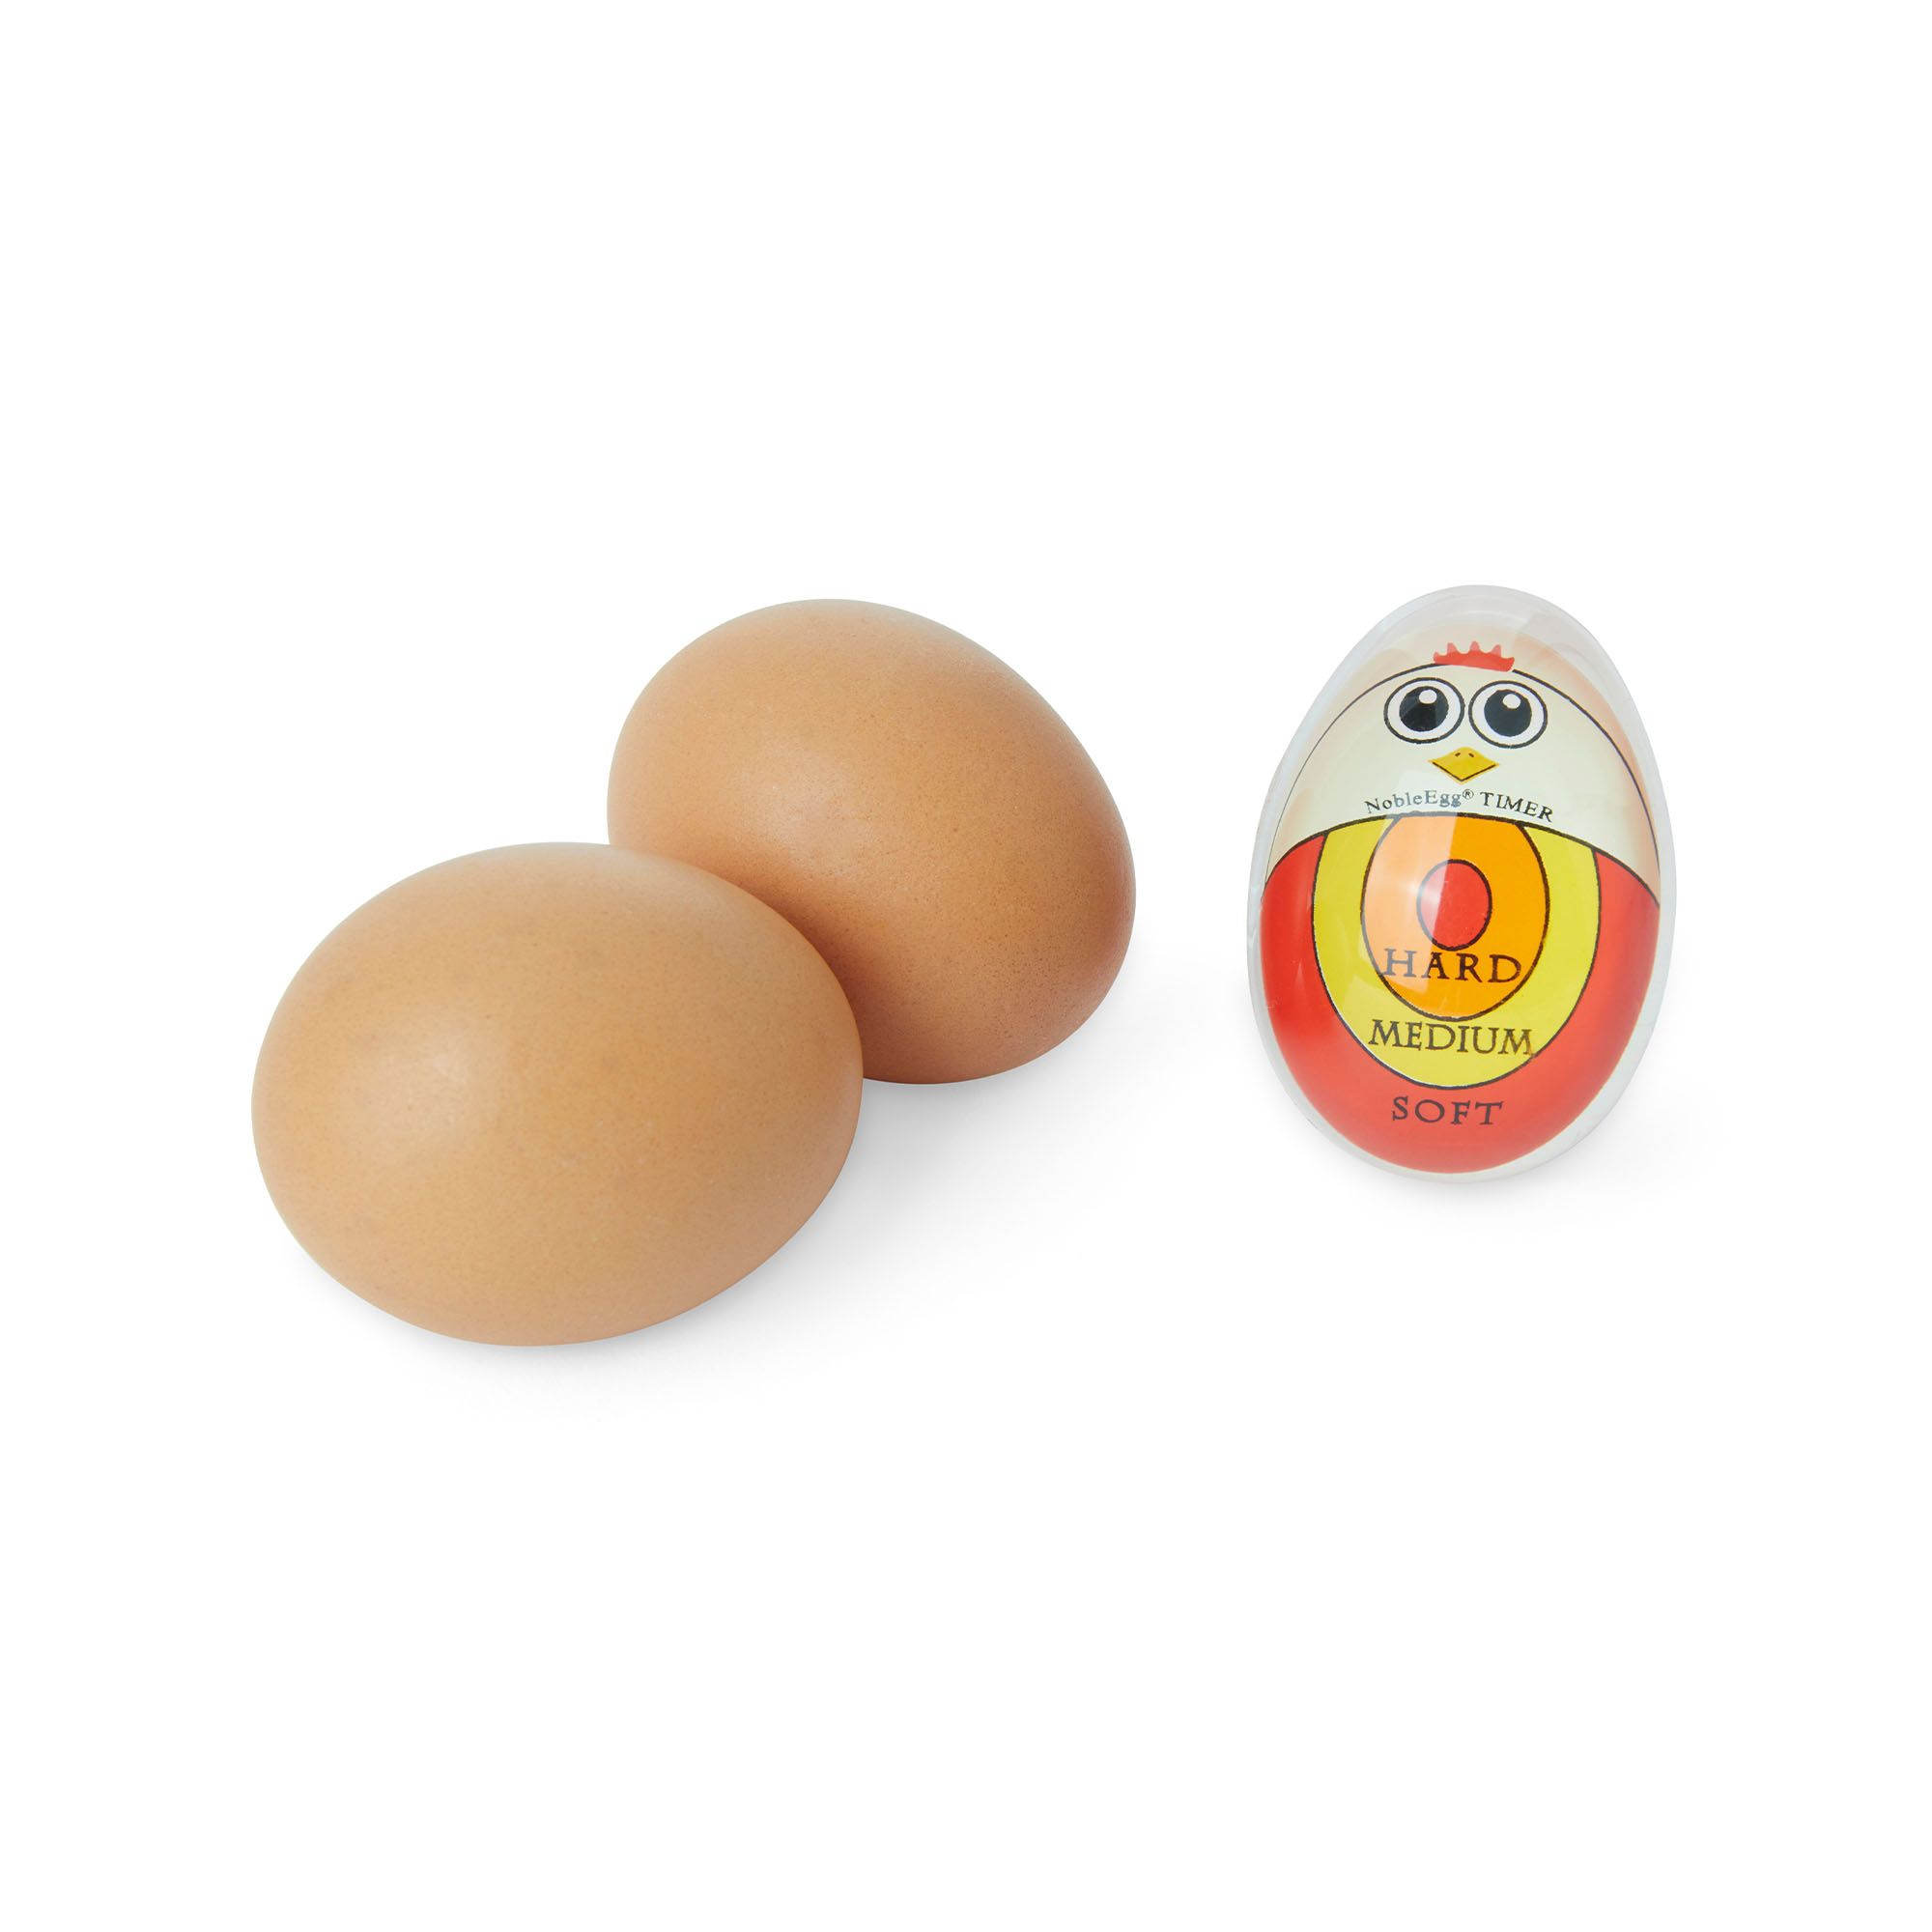 Indicatore per cottura uova rosso, rosso, large